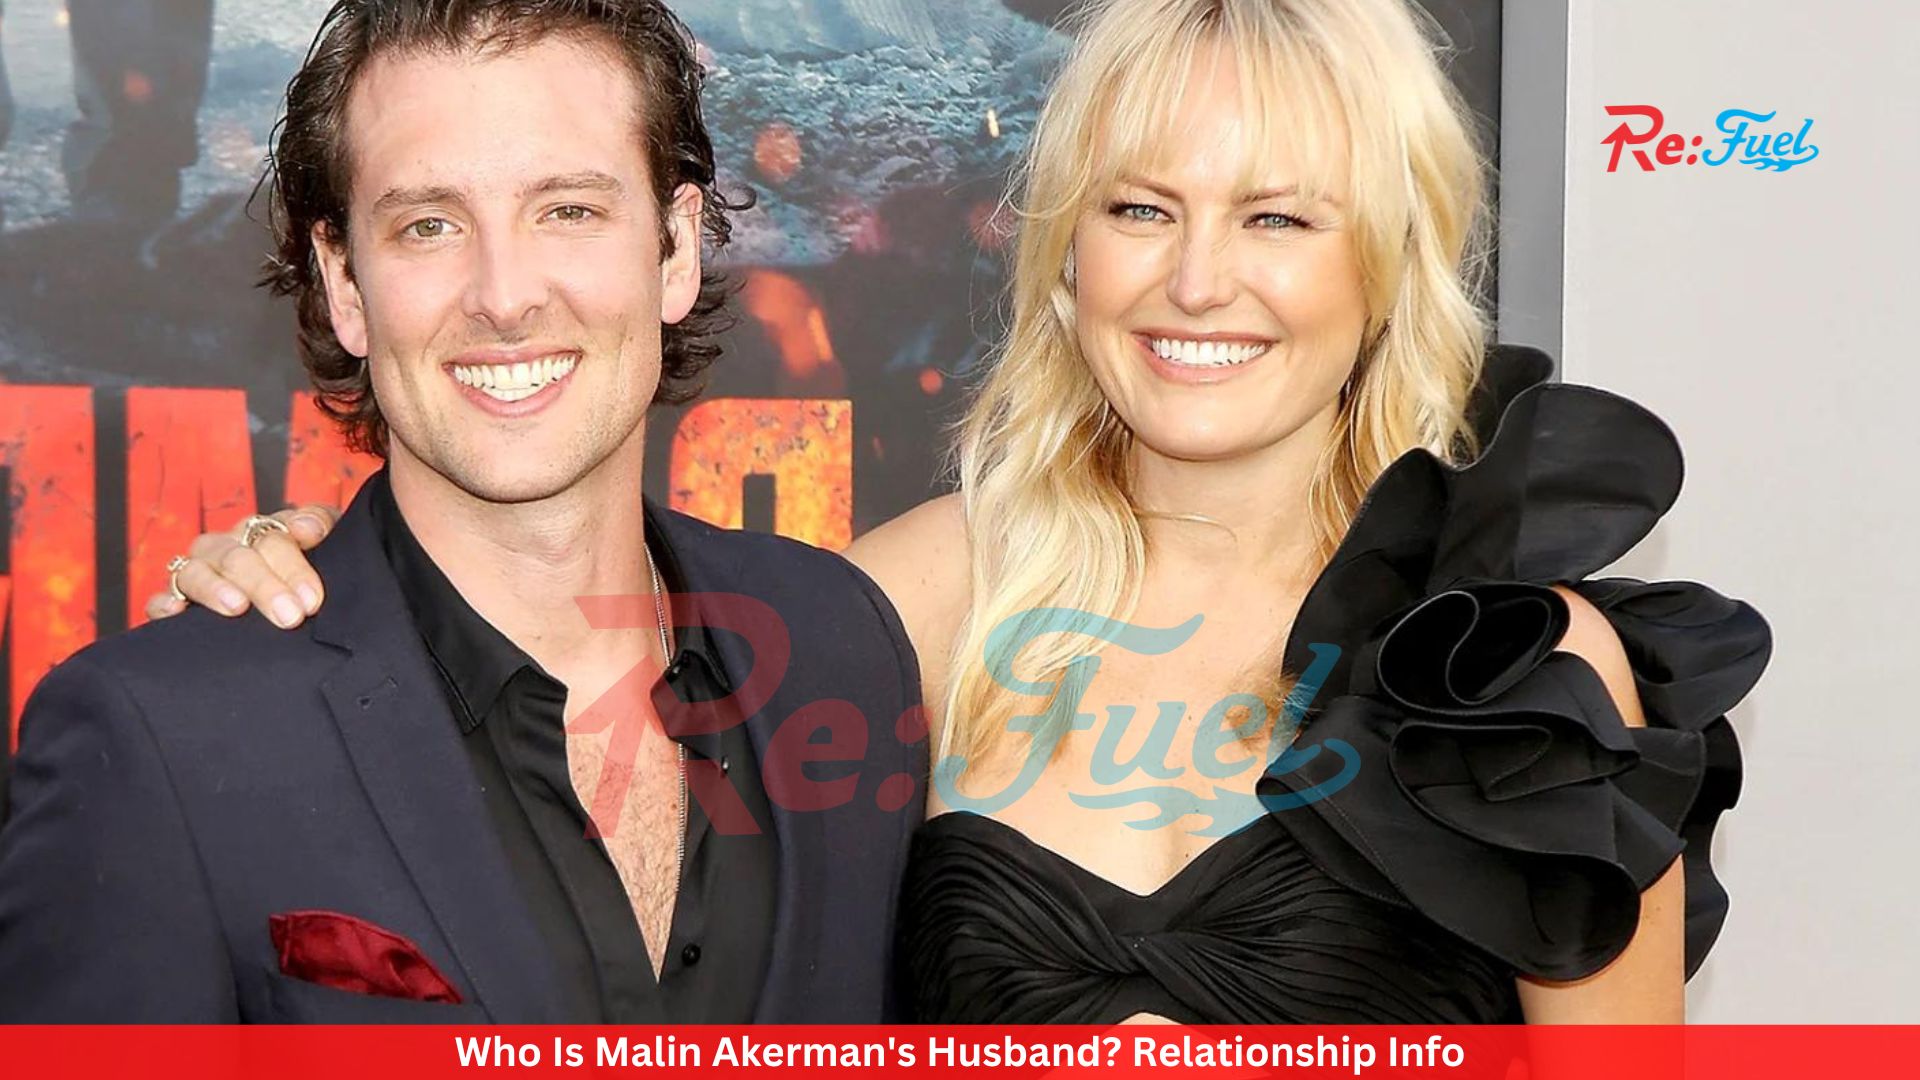 Who Is Malin Akerman's Husband? Relationship Info